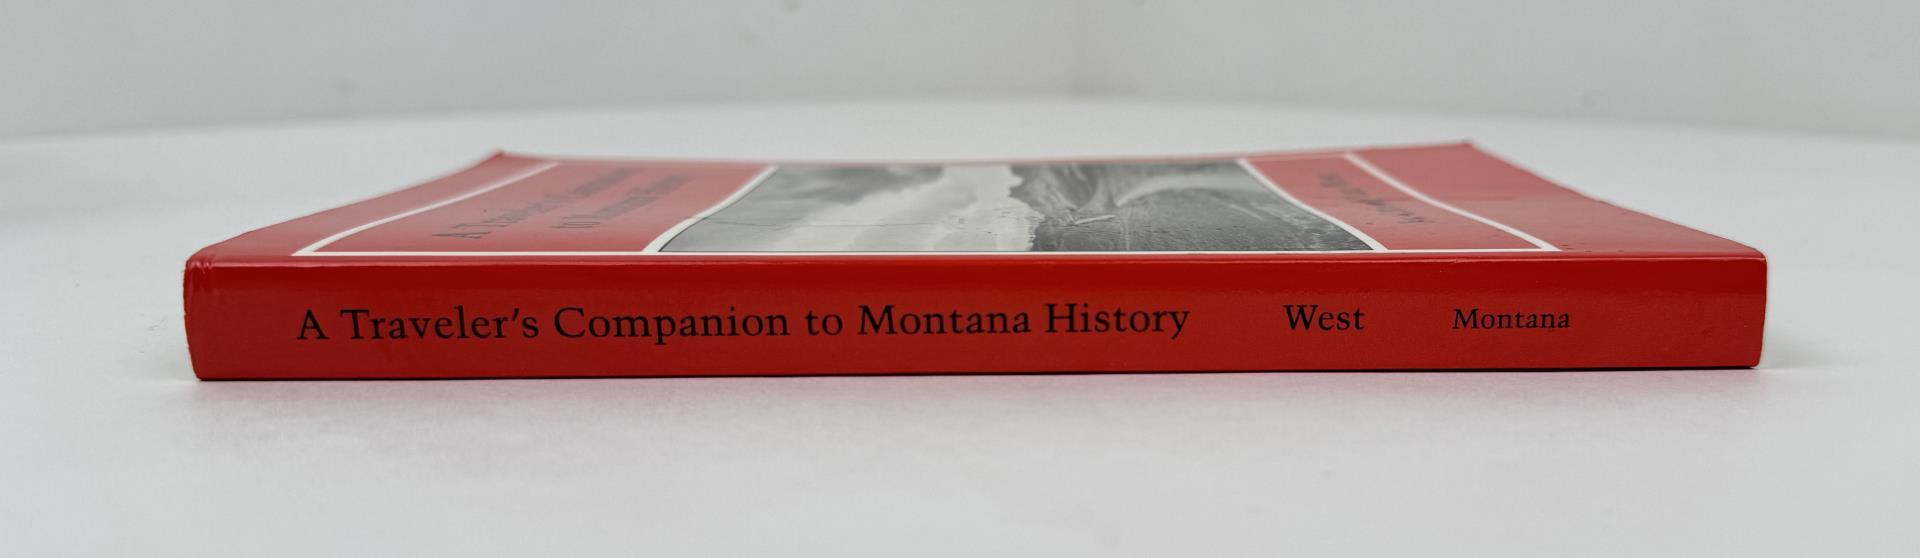 A Traveler's Companion To Montana History